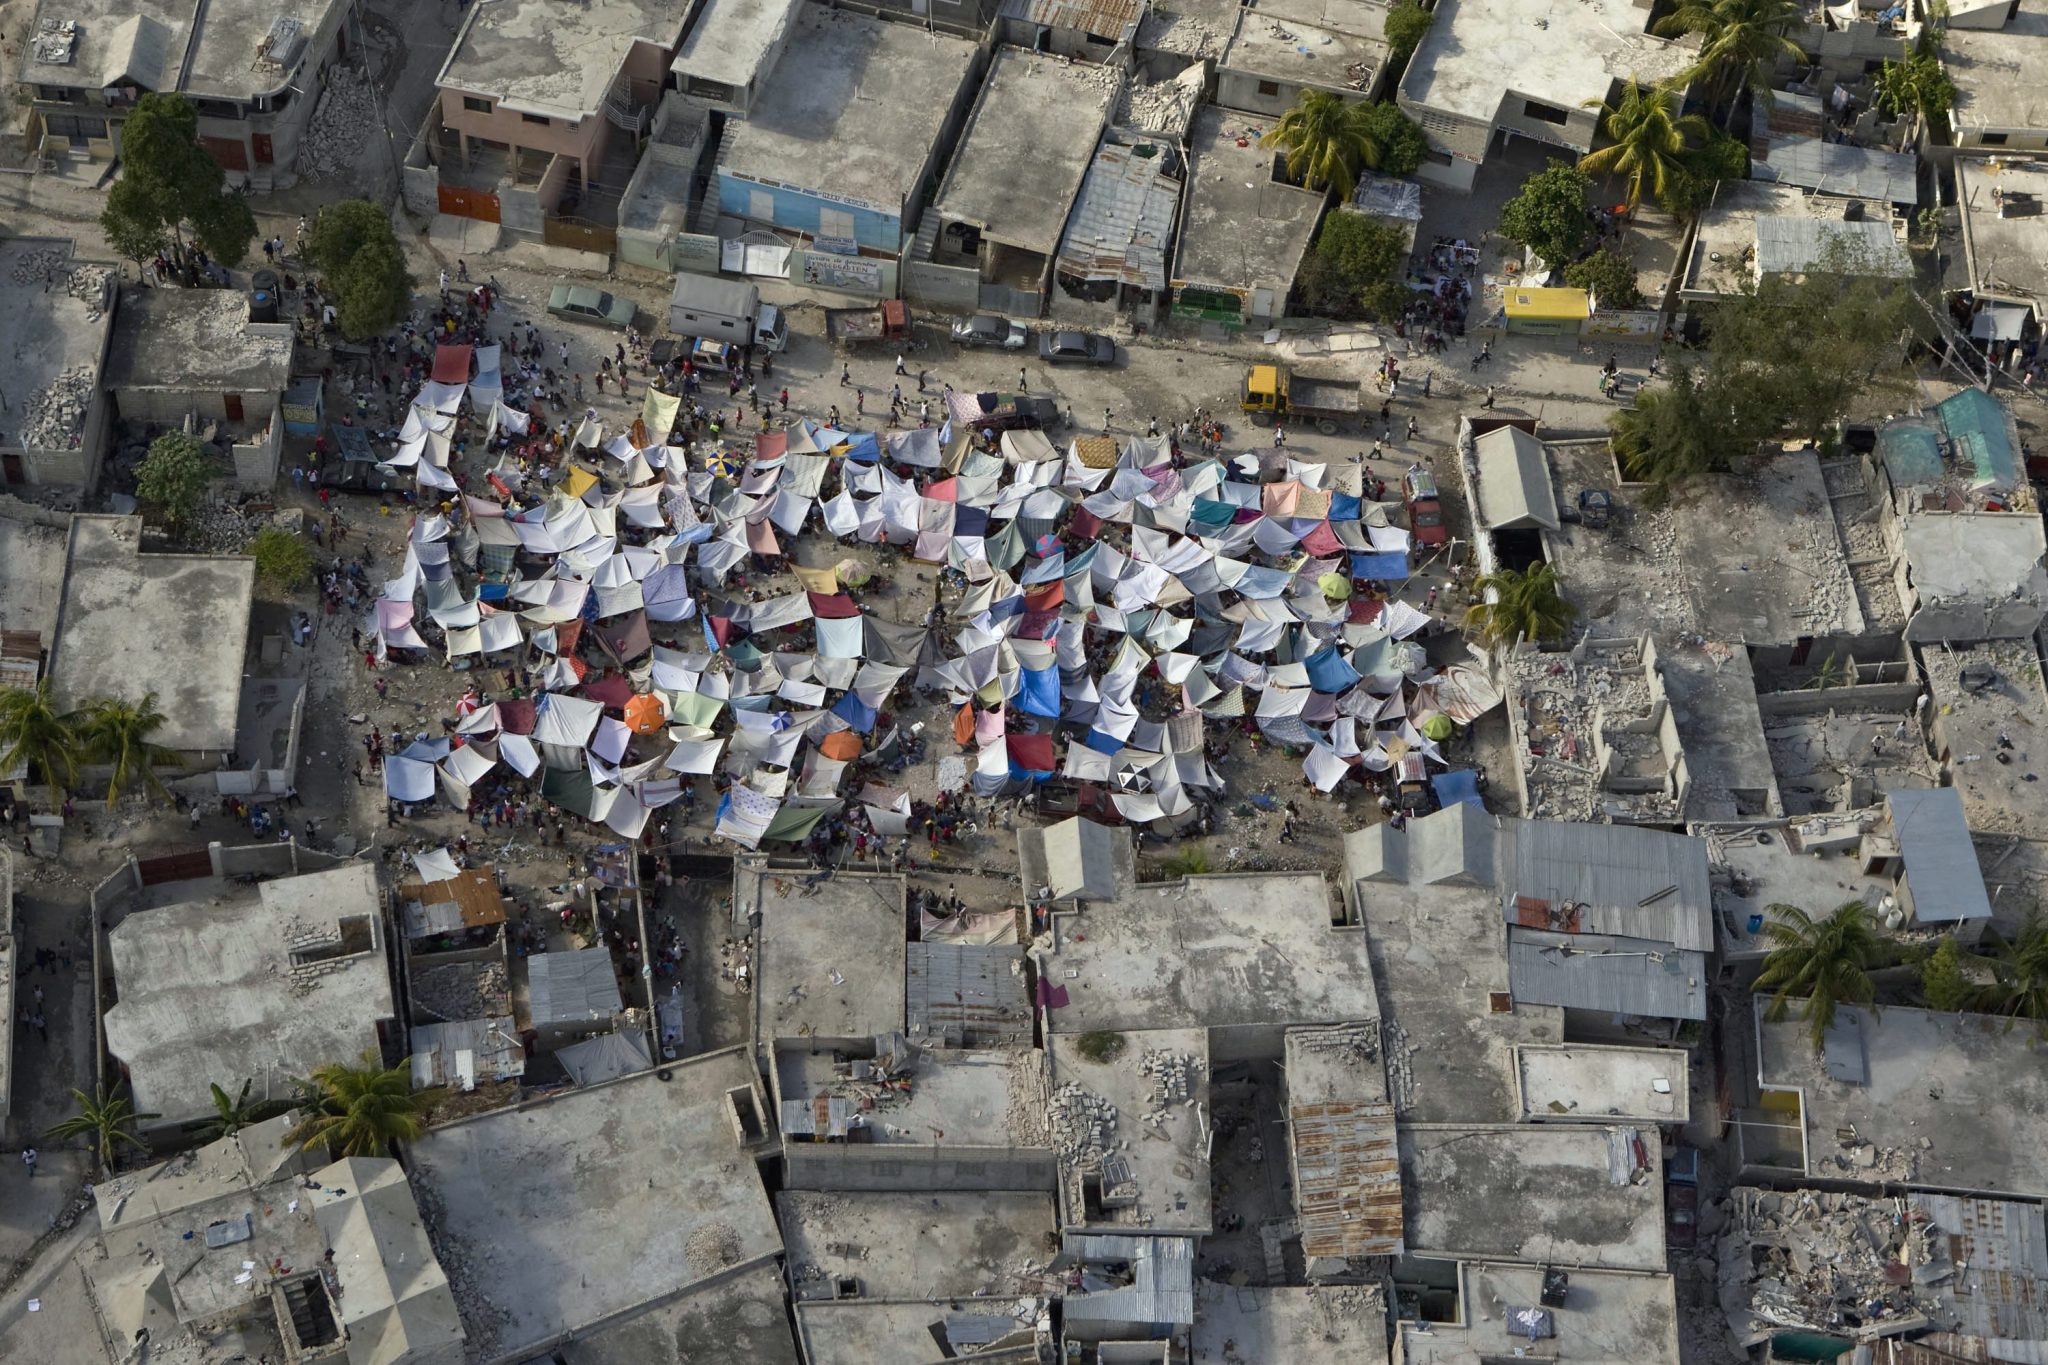 Survivors assemble a tent city following the 2010 earthquake in Haiti.